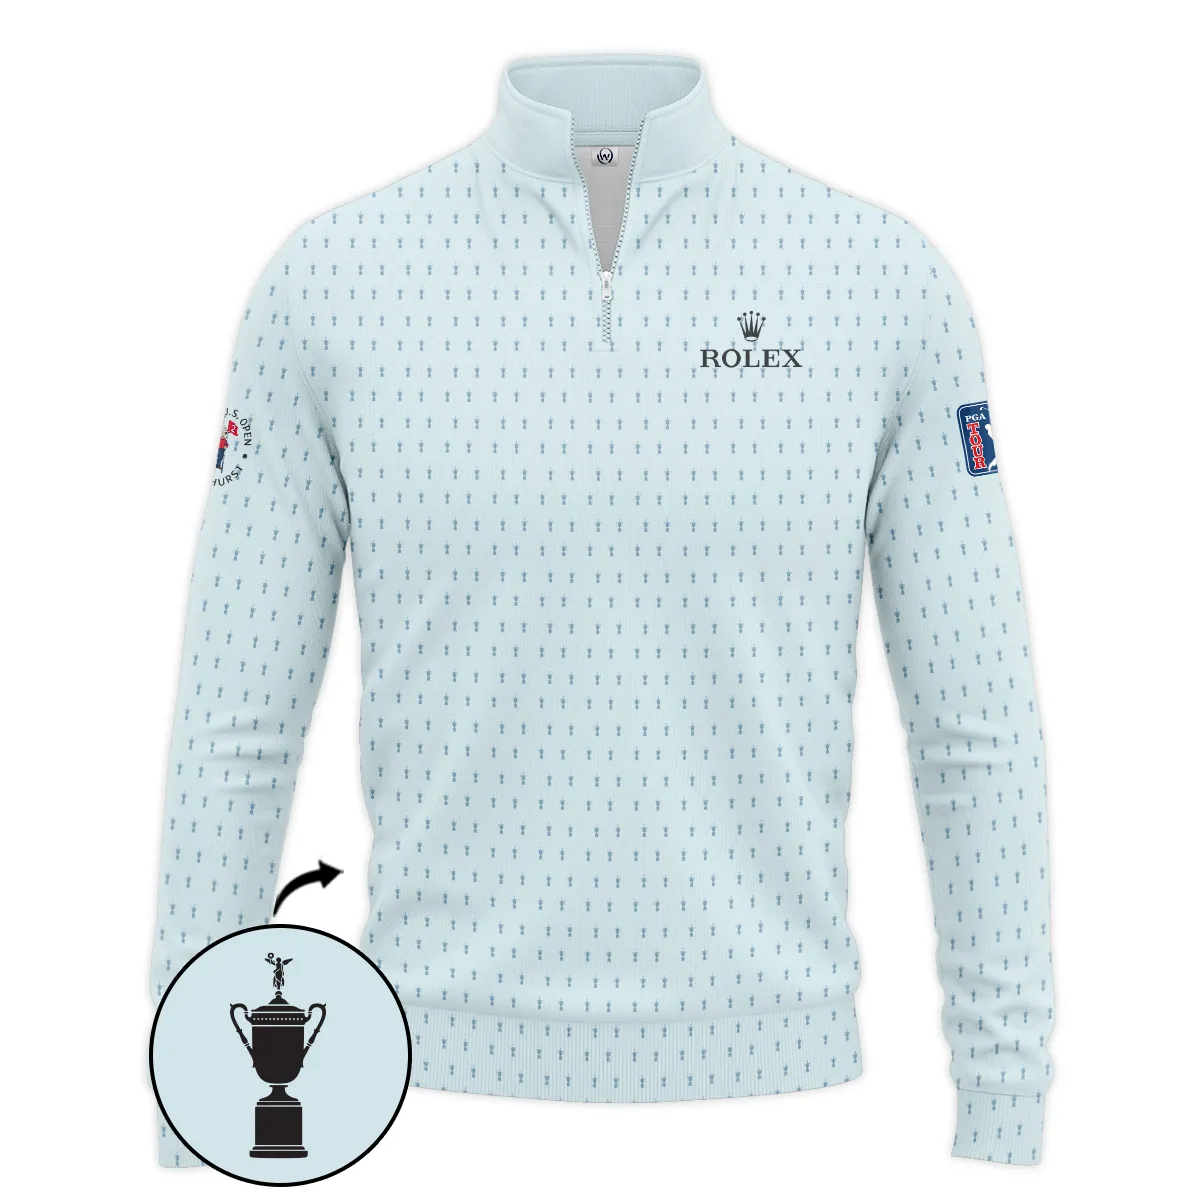 Golf Pattern Cup Light Blue Mix Green 124th U.S. Open Pinehurst Pinehurst Rolex Polo Shirt Style Classic